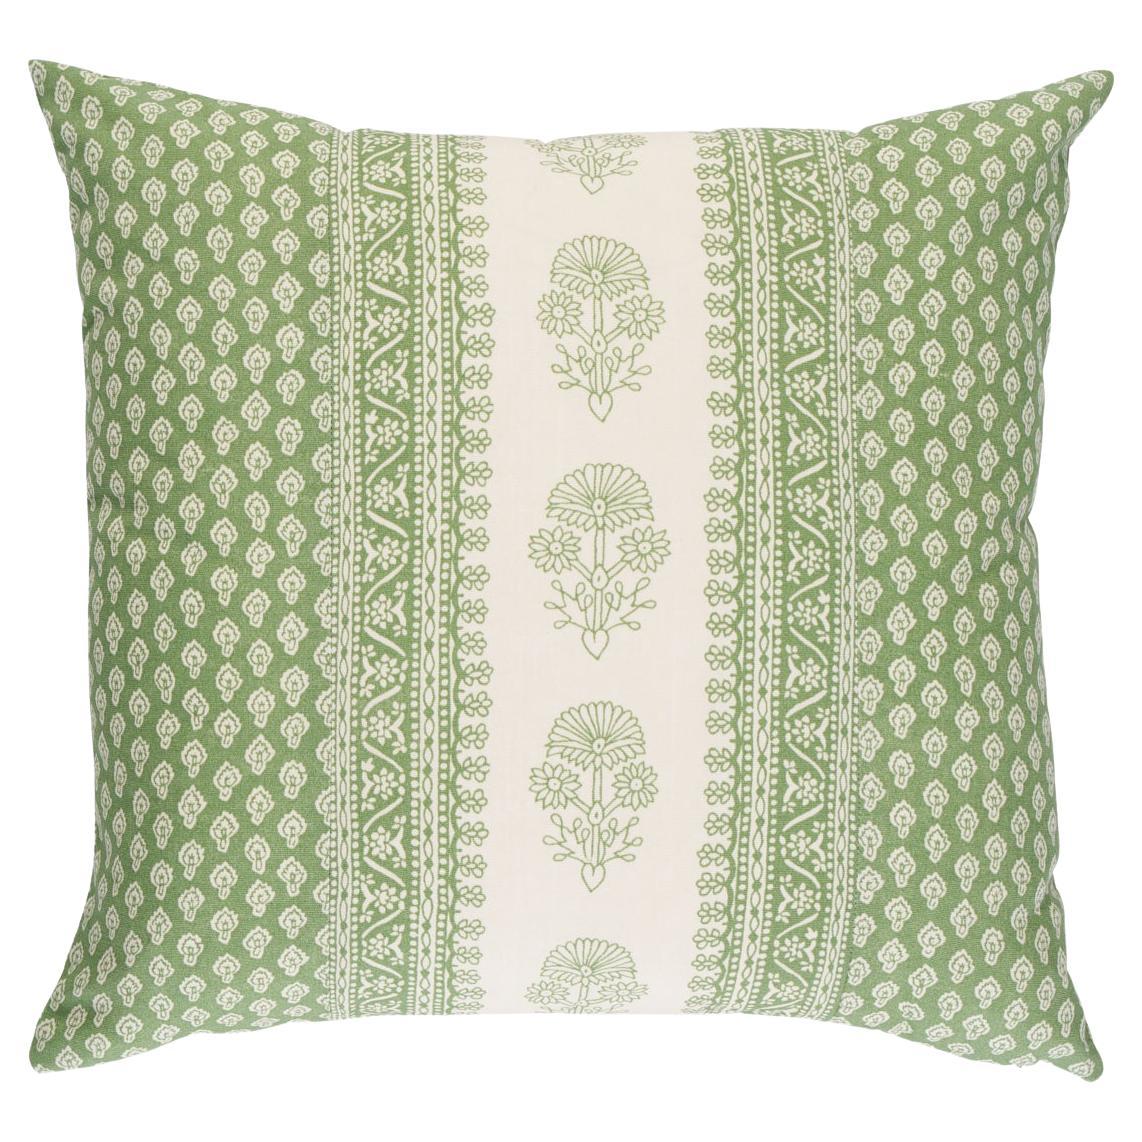 Hyacinth I/O Pillow 20 "